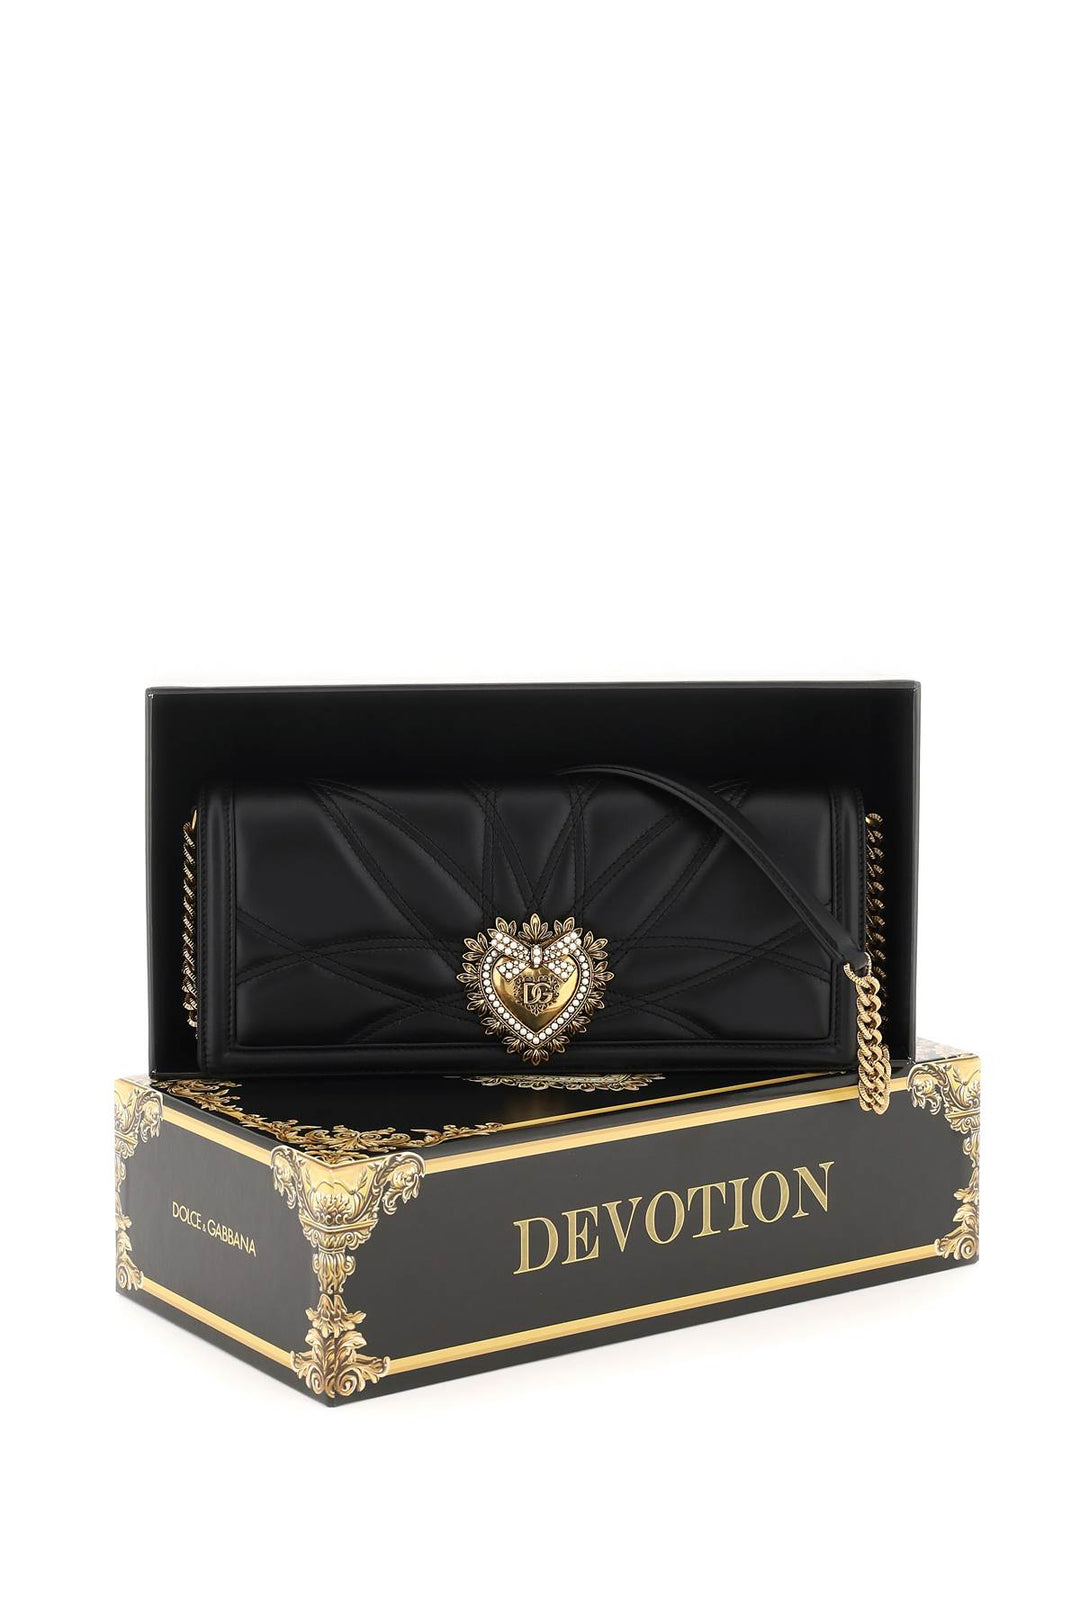 Borsa Baguette 'Devotion' - Dolce & Gabbana - Donna